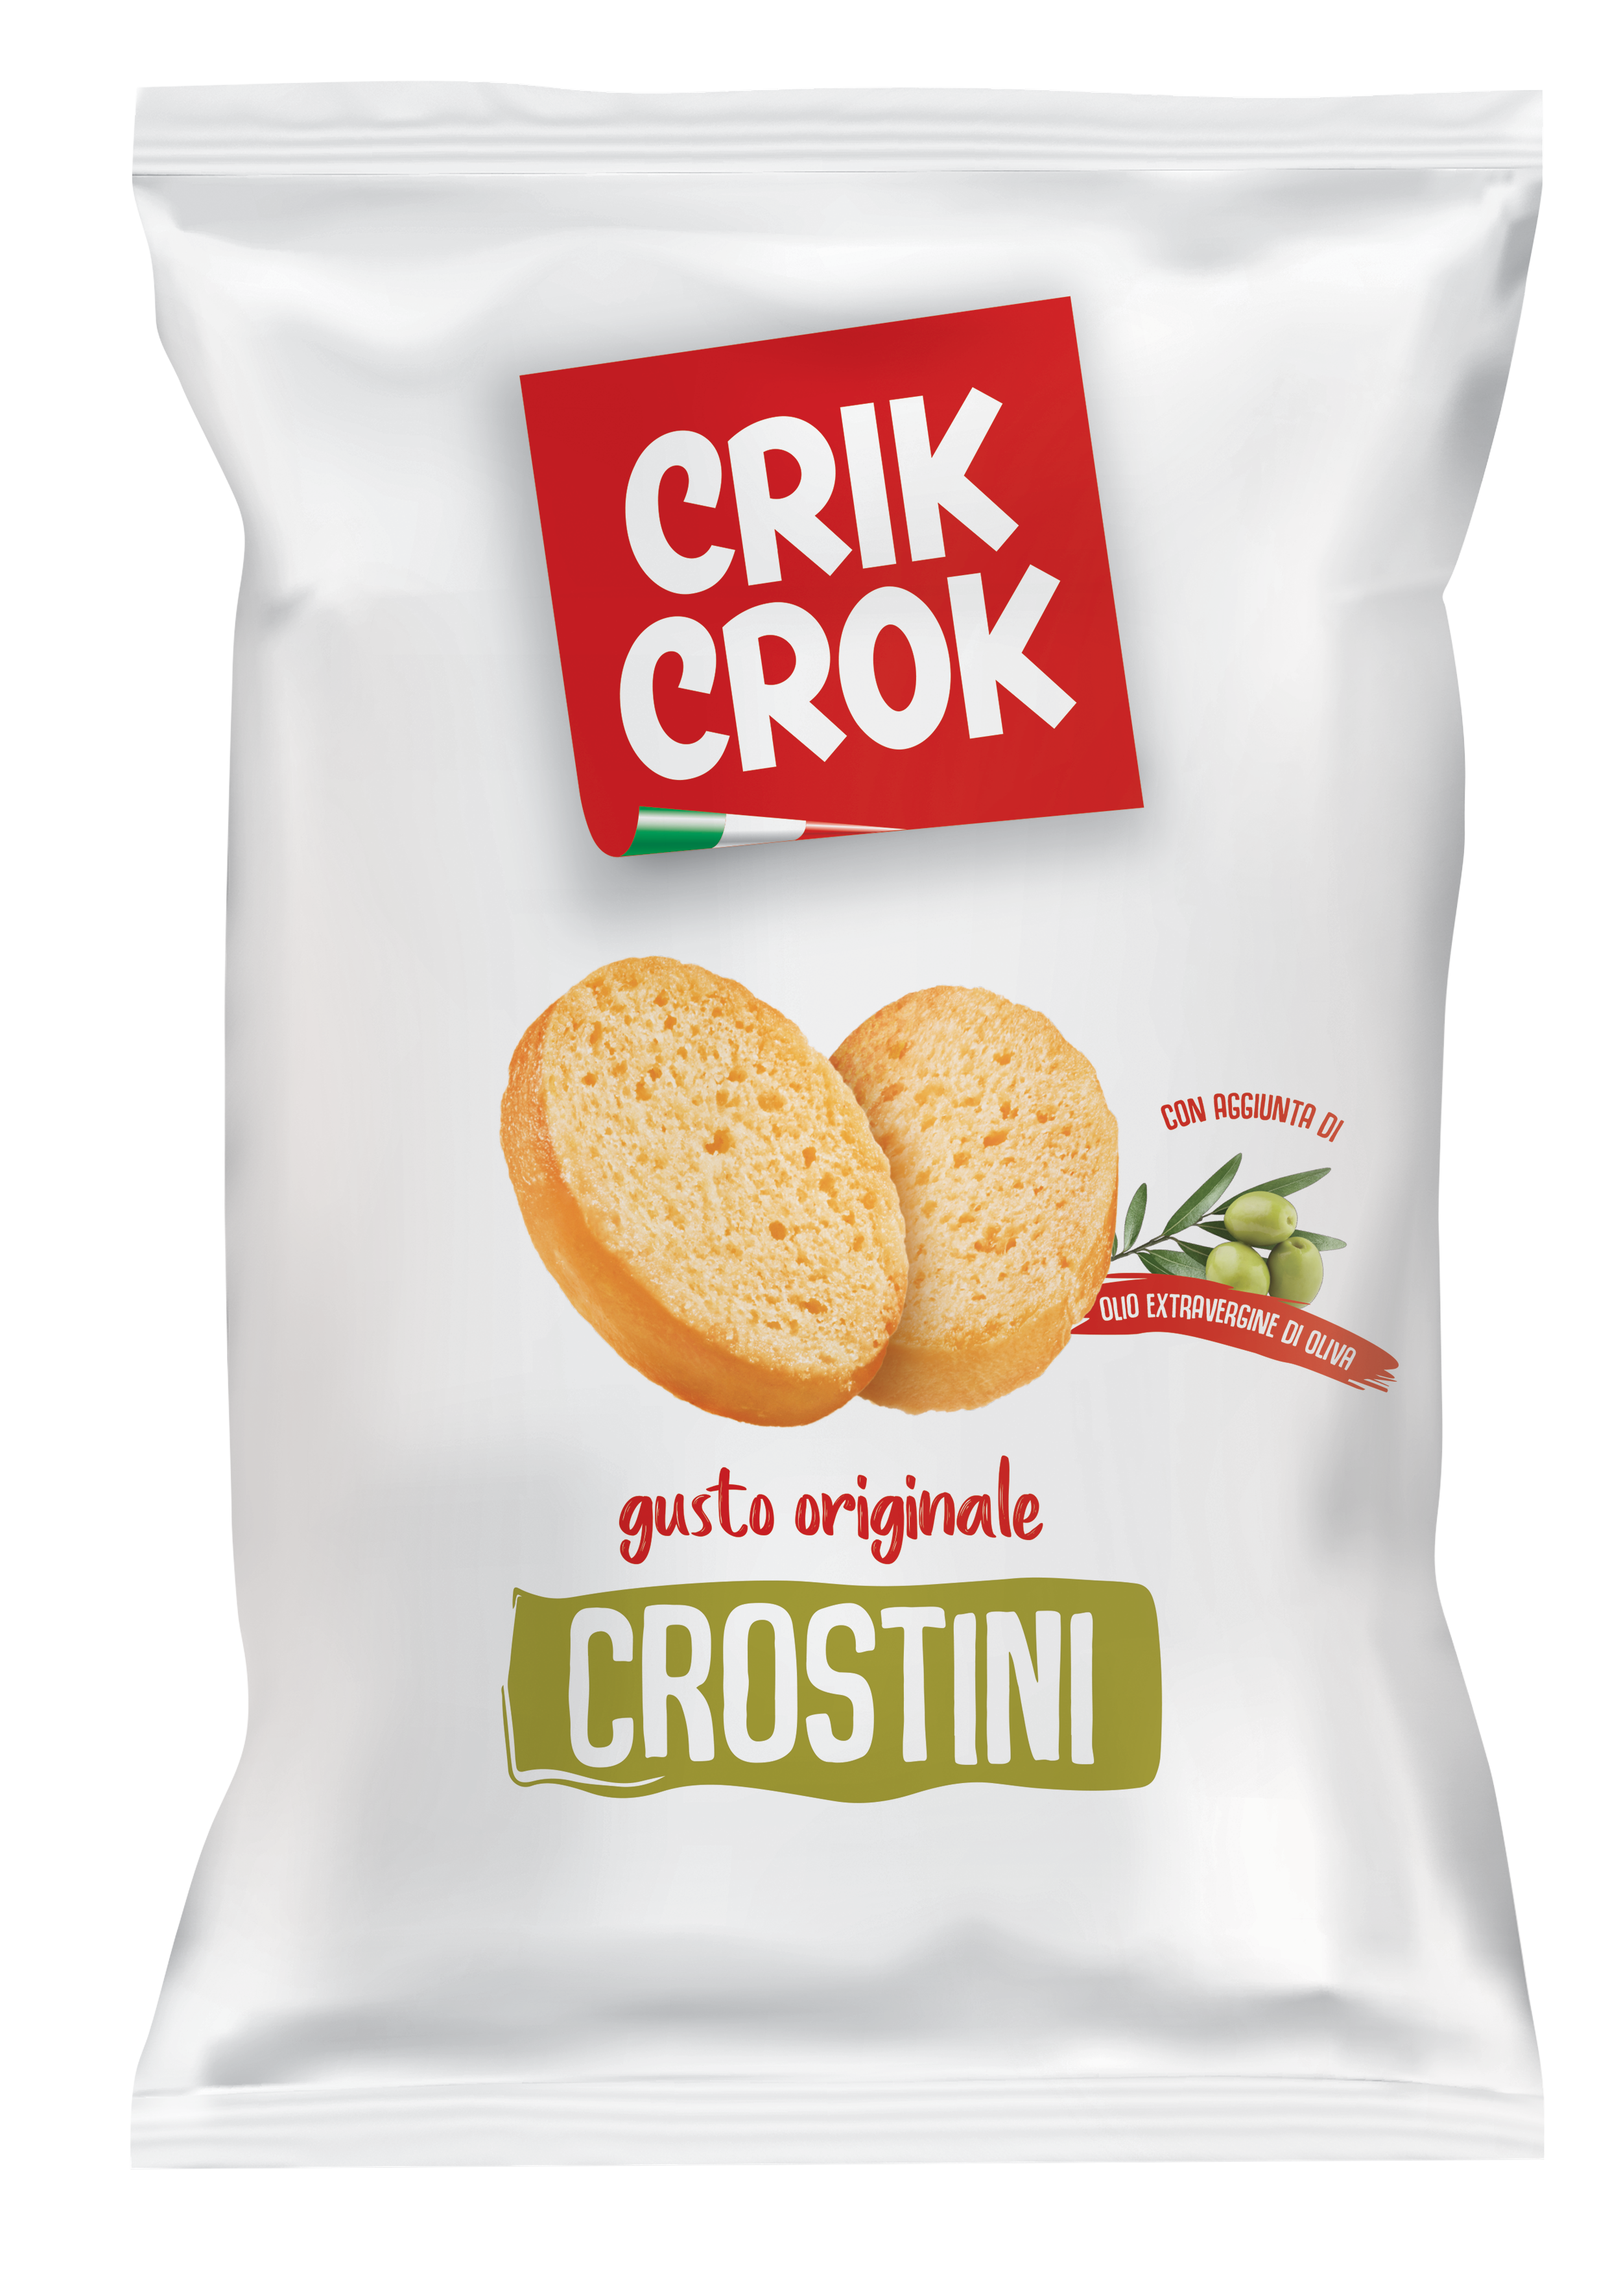 Crostini